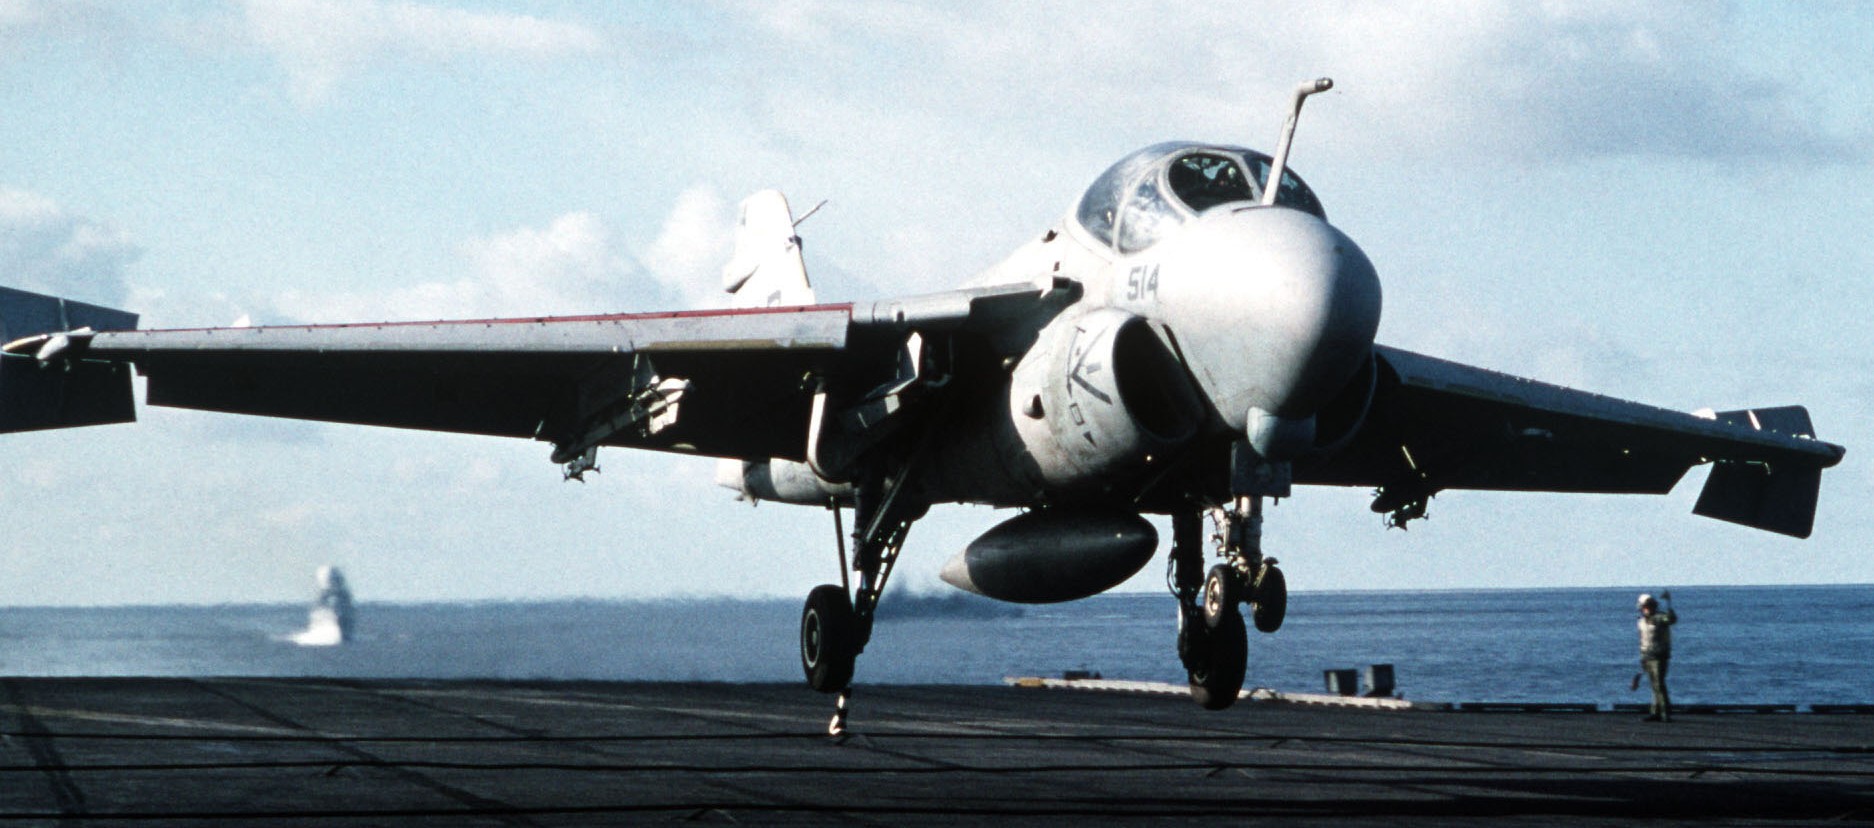 va-85 black falcons attack squadron us navy a-6e intruder carrier air wing cvw-1 uss america cv-66 09